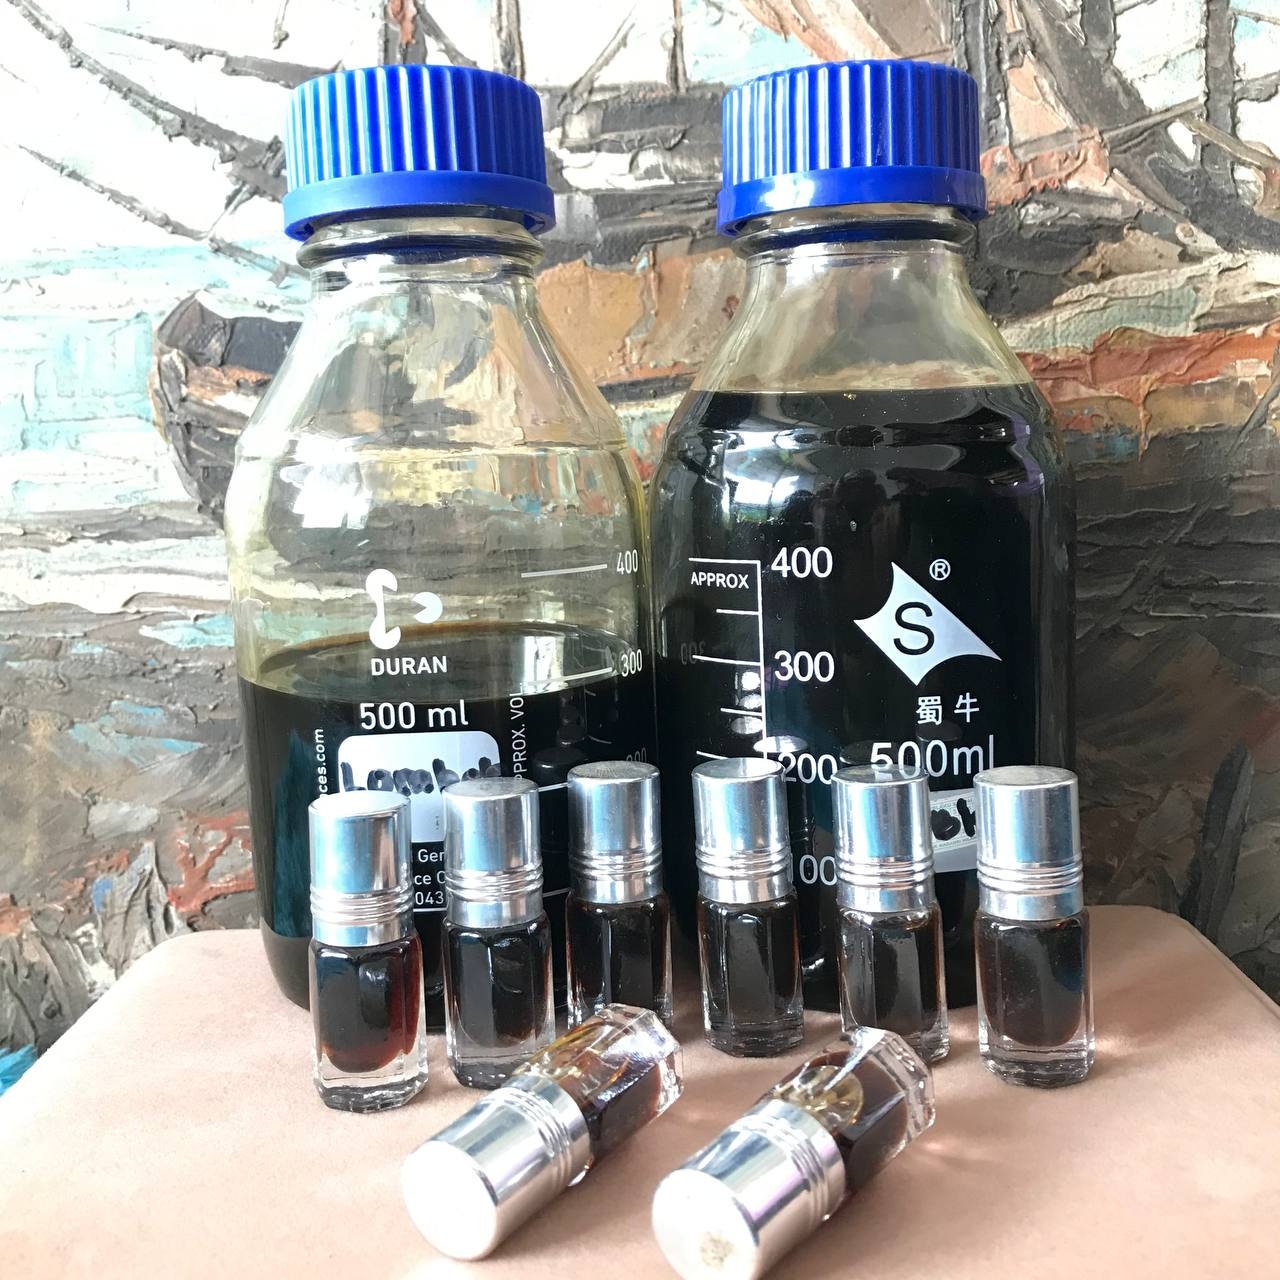 Oud Oil 100% Pure - Kinam / Kyara (沈香) Agarwood/Oud Oil – Sultan Fragrances